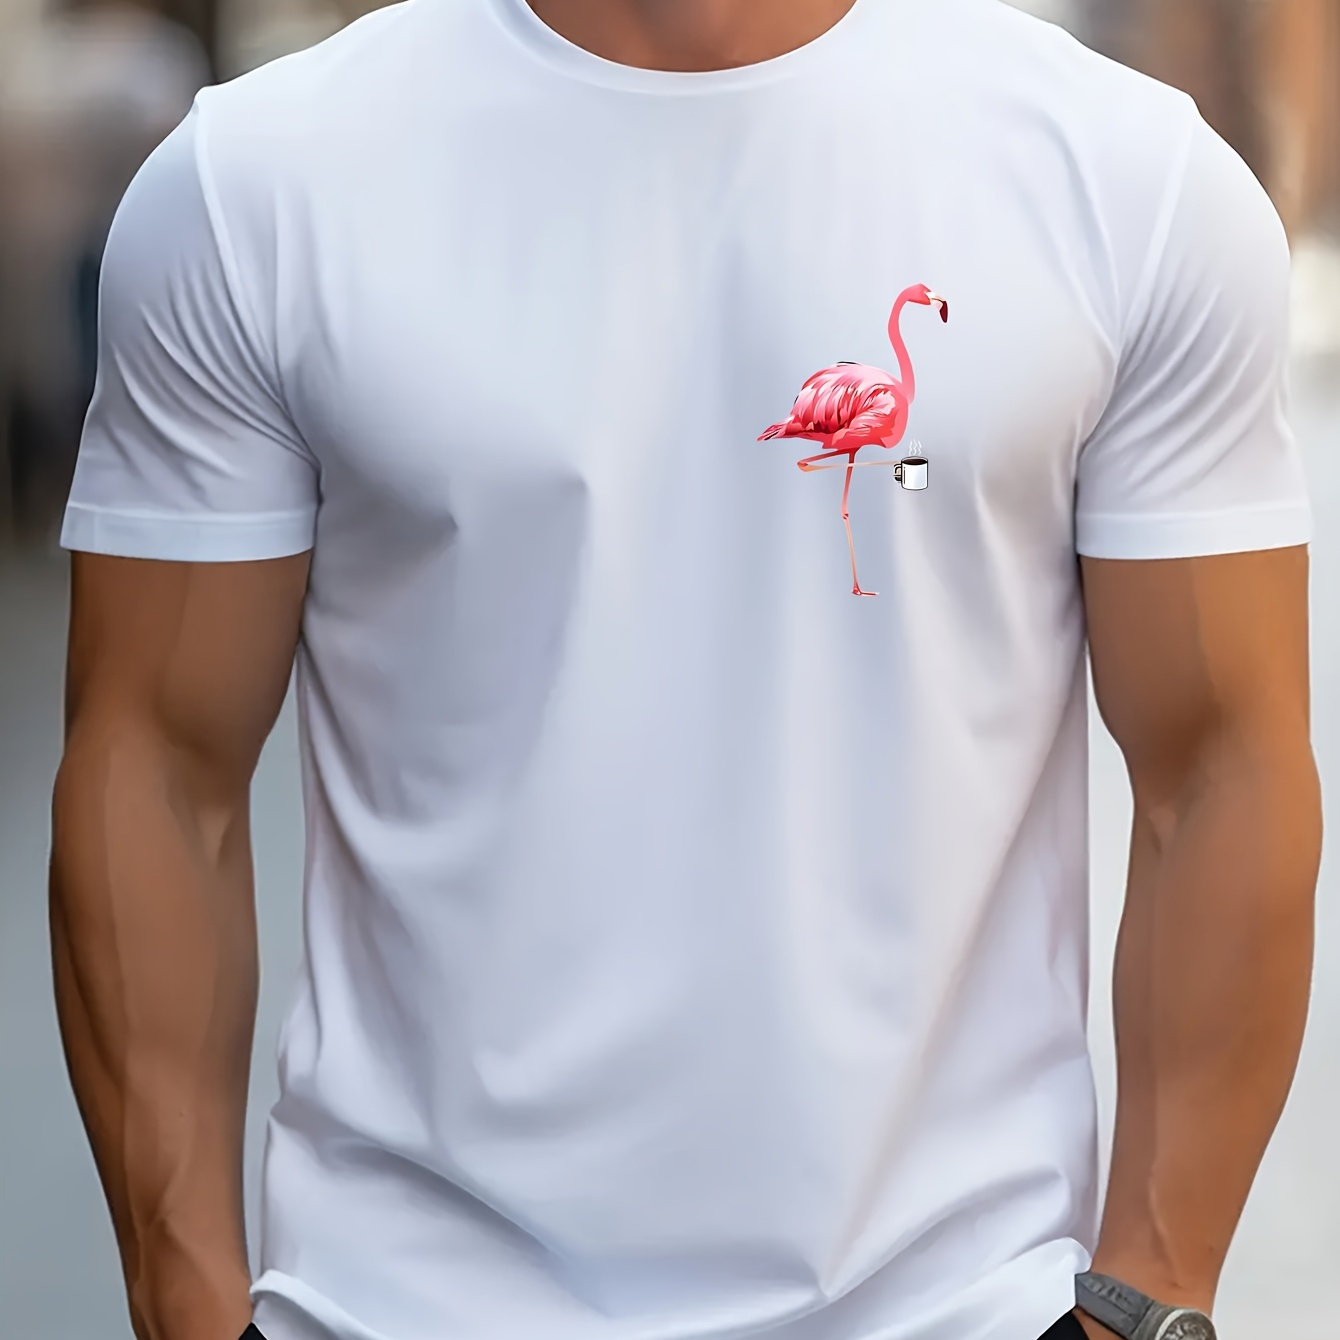 

Flamingo Print Tee Shirt, Tees For Men, Casual Short Sleeve T-shirt For Summer